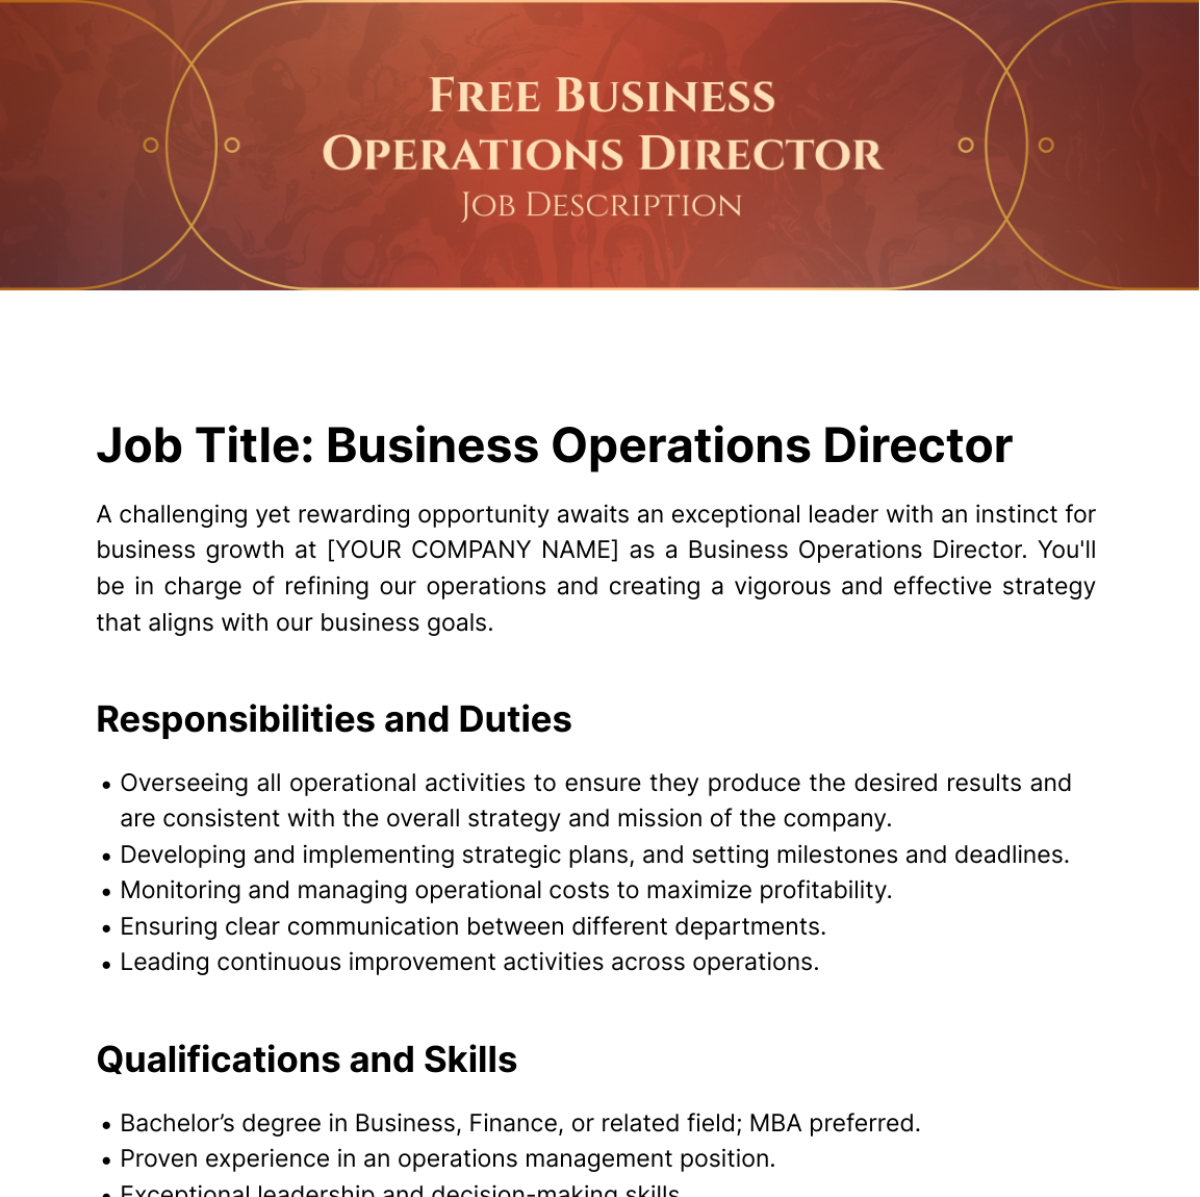 Free Business Operations Director Job Description Template